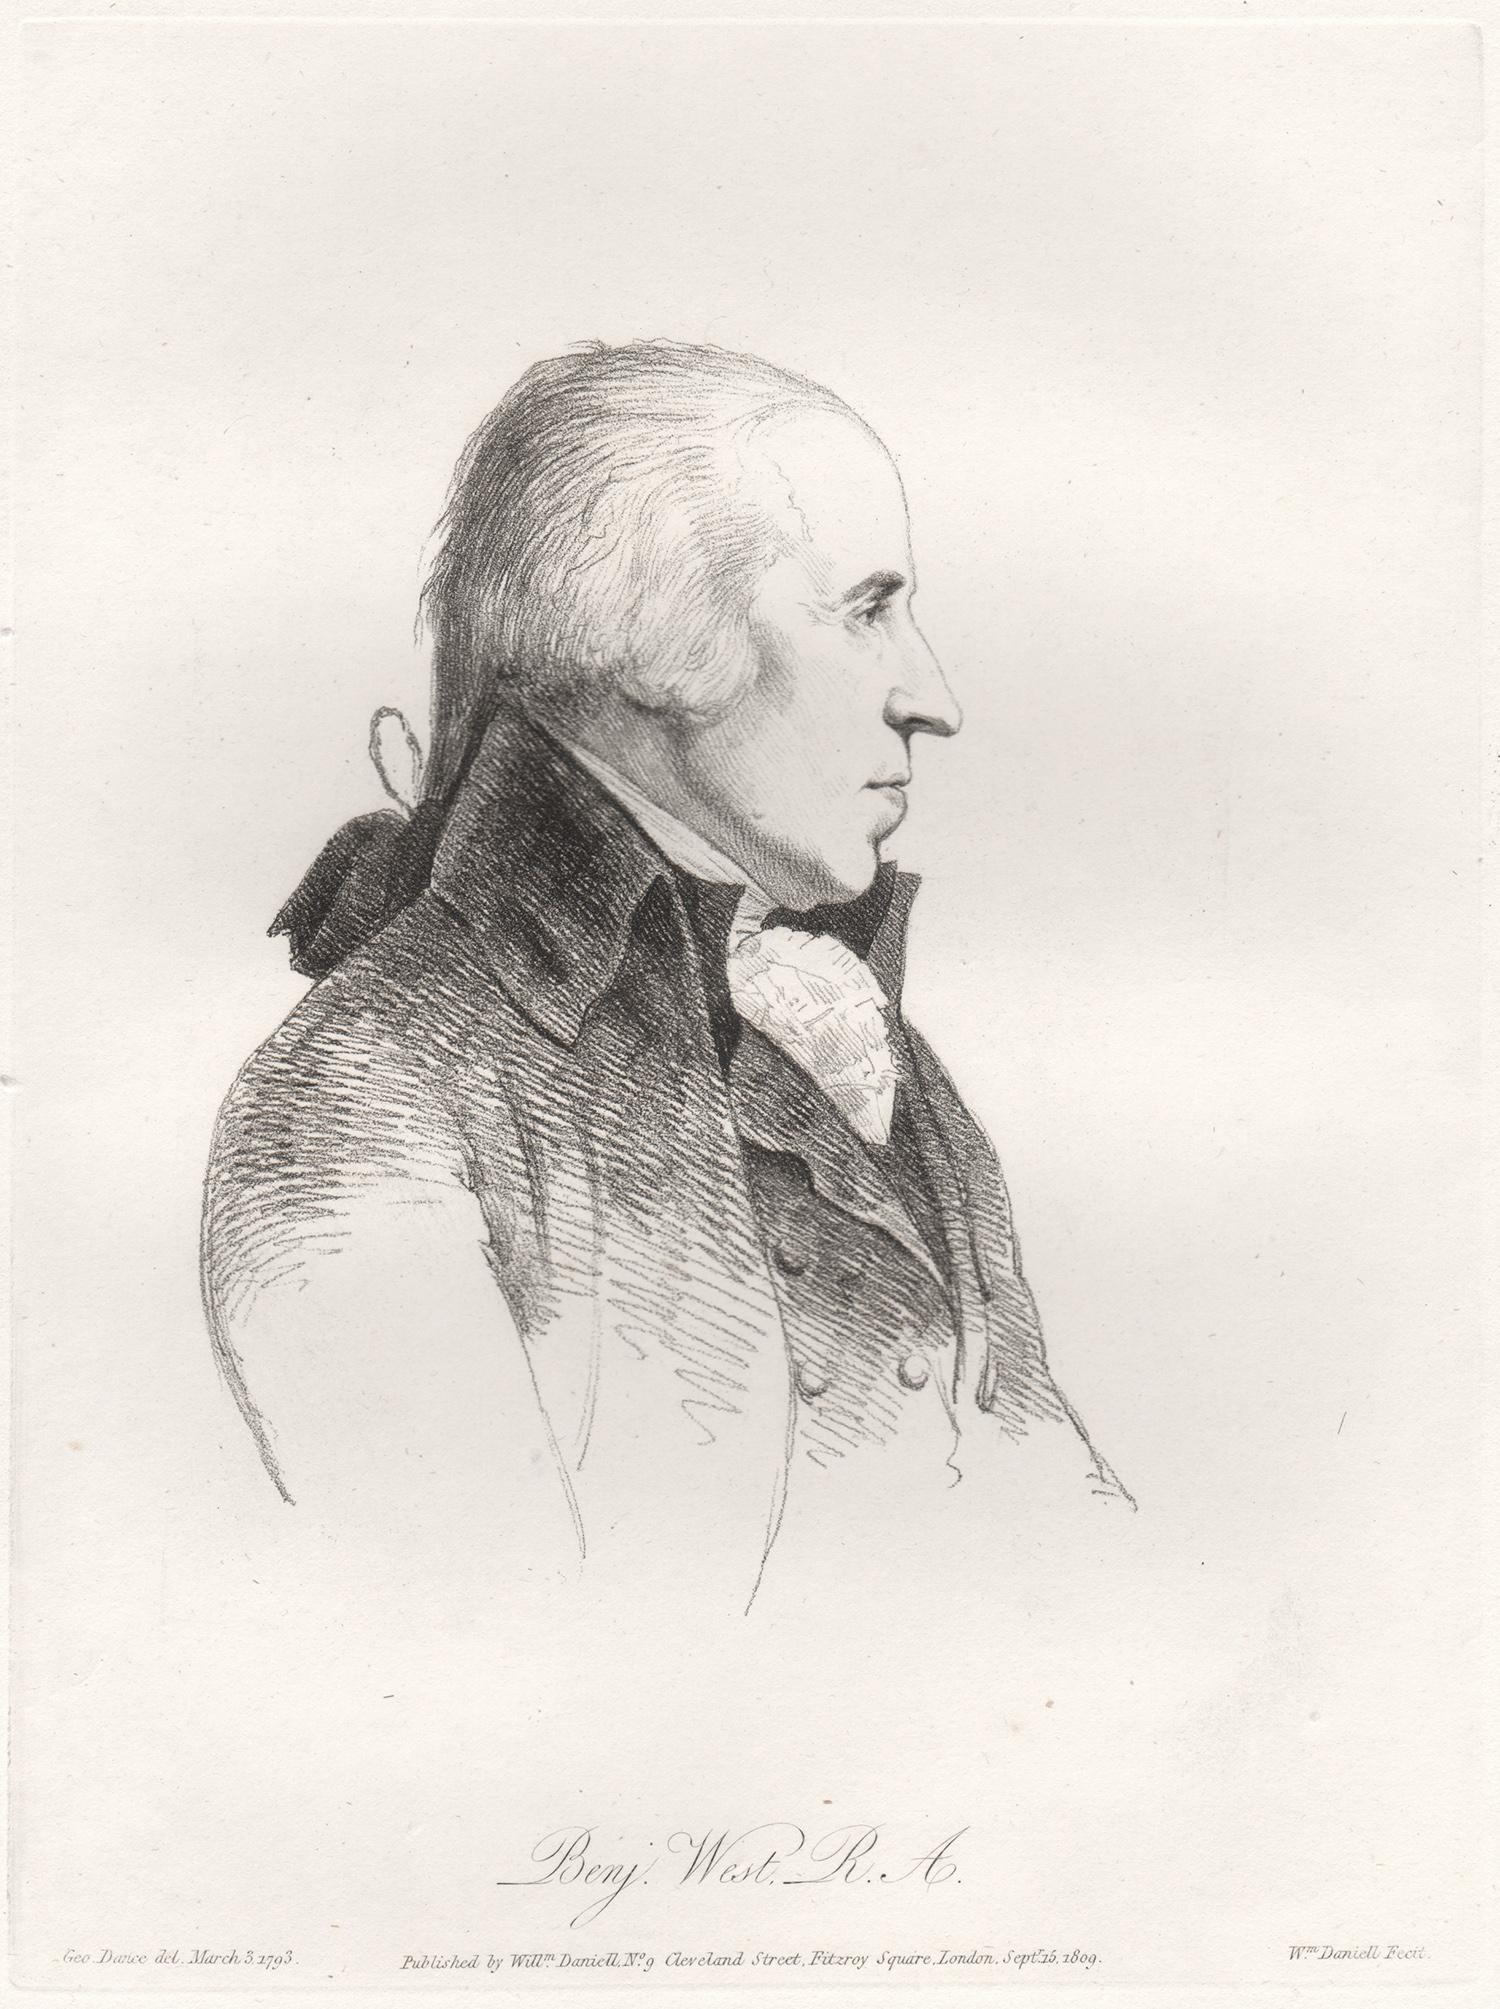 William Daniell after George Dance Portrait Print - Benjamin West, history painter, portrait, soft ground etching, 1809